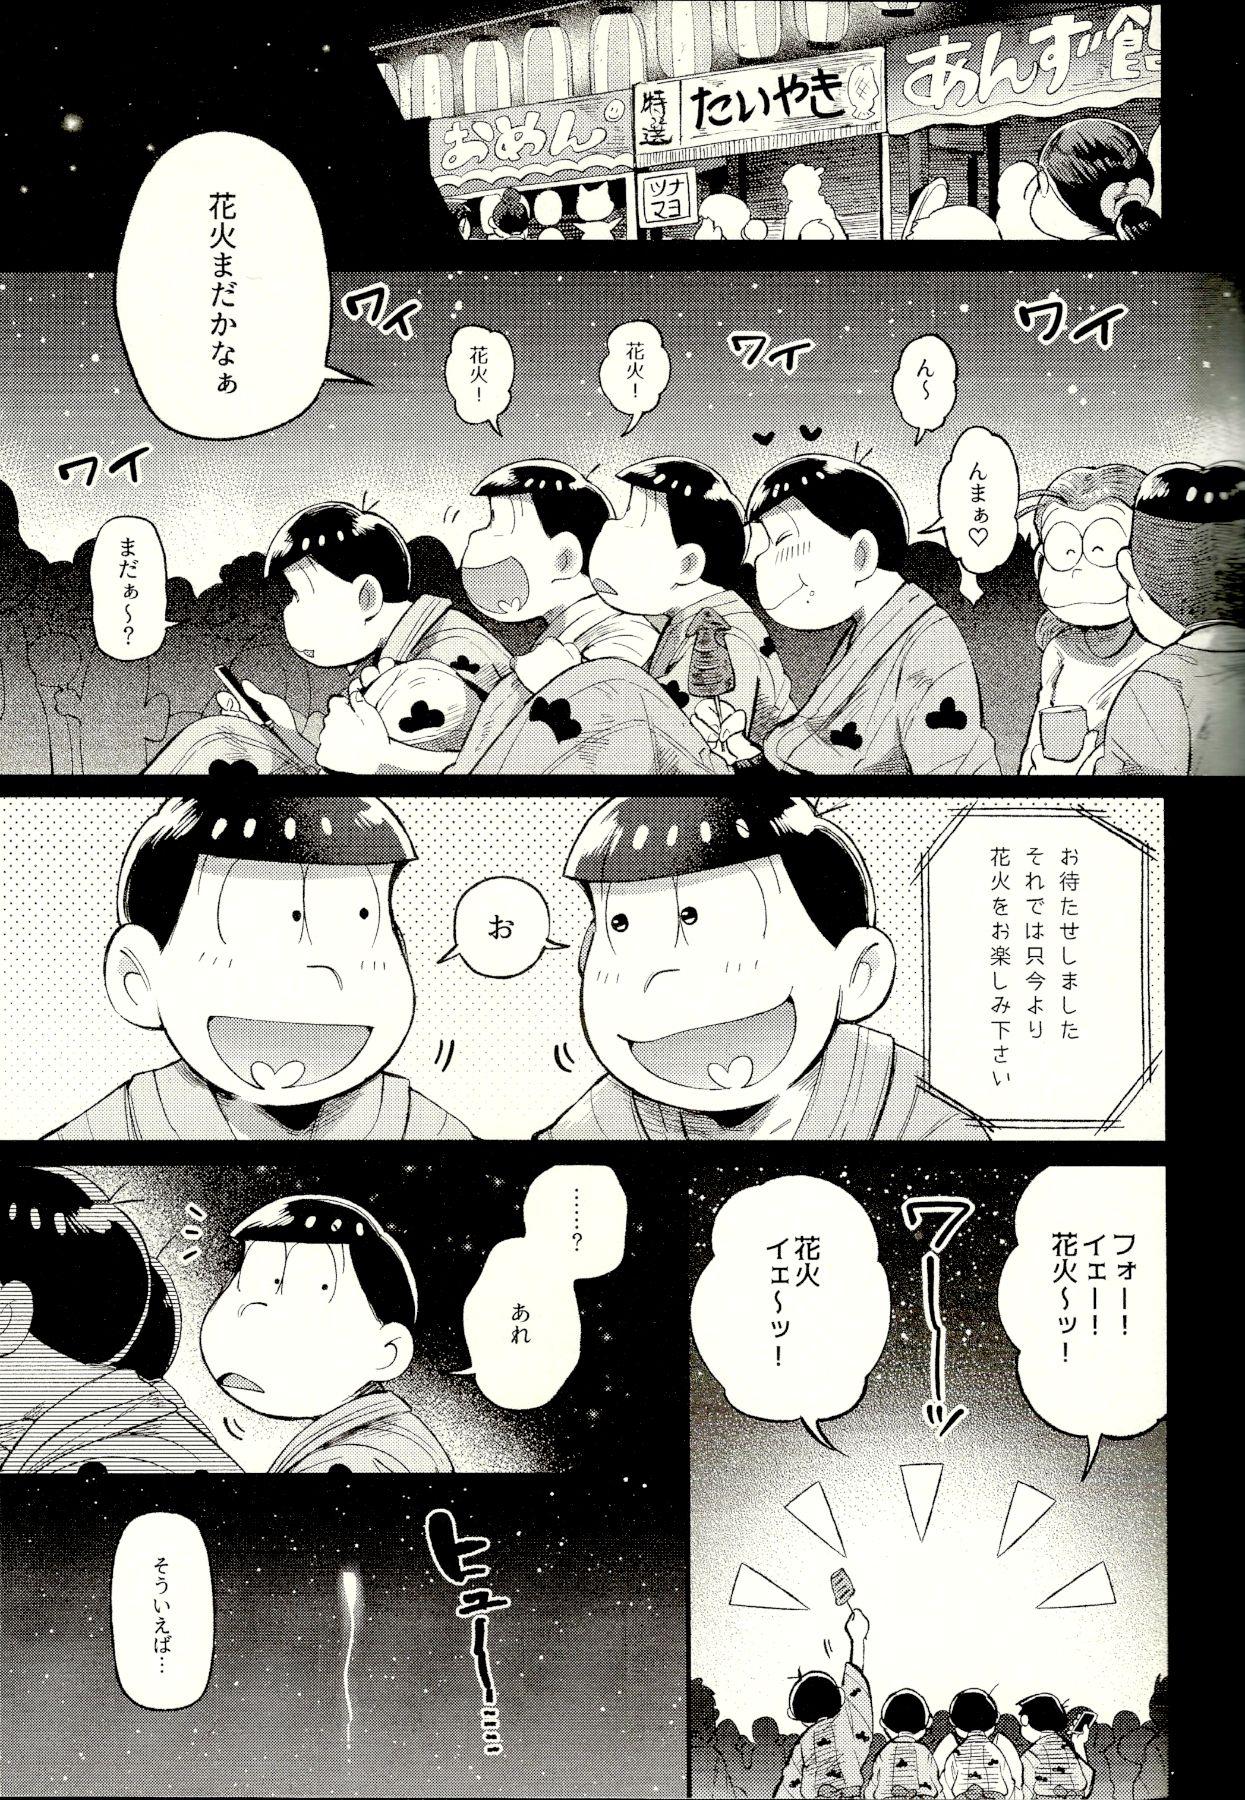 Gaydudes Season in the Summer - Osomatsu-san Desnuda - Page 3